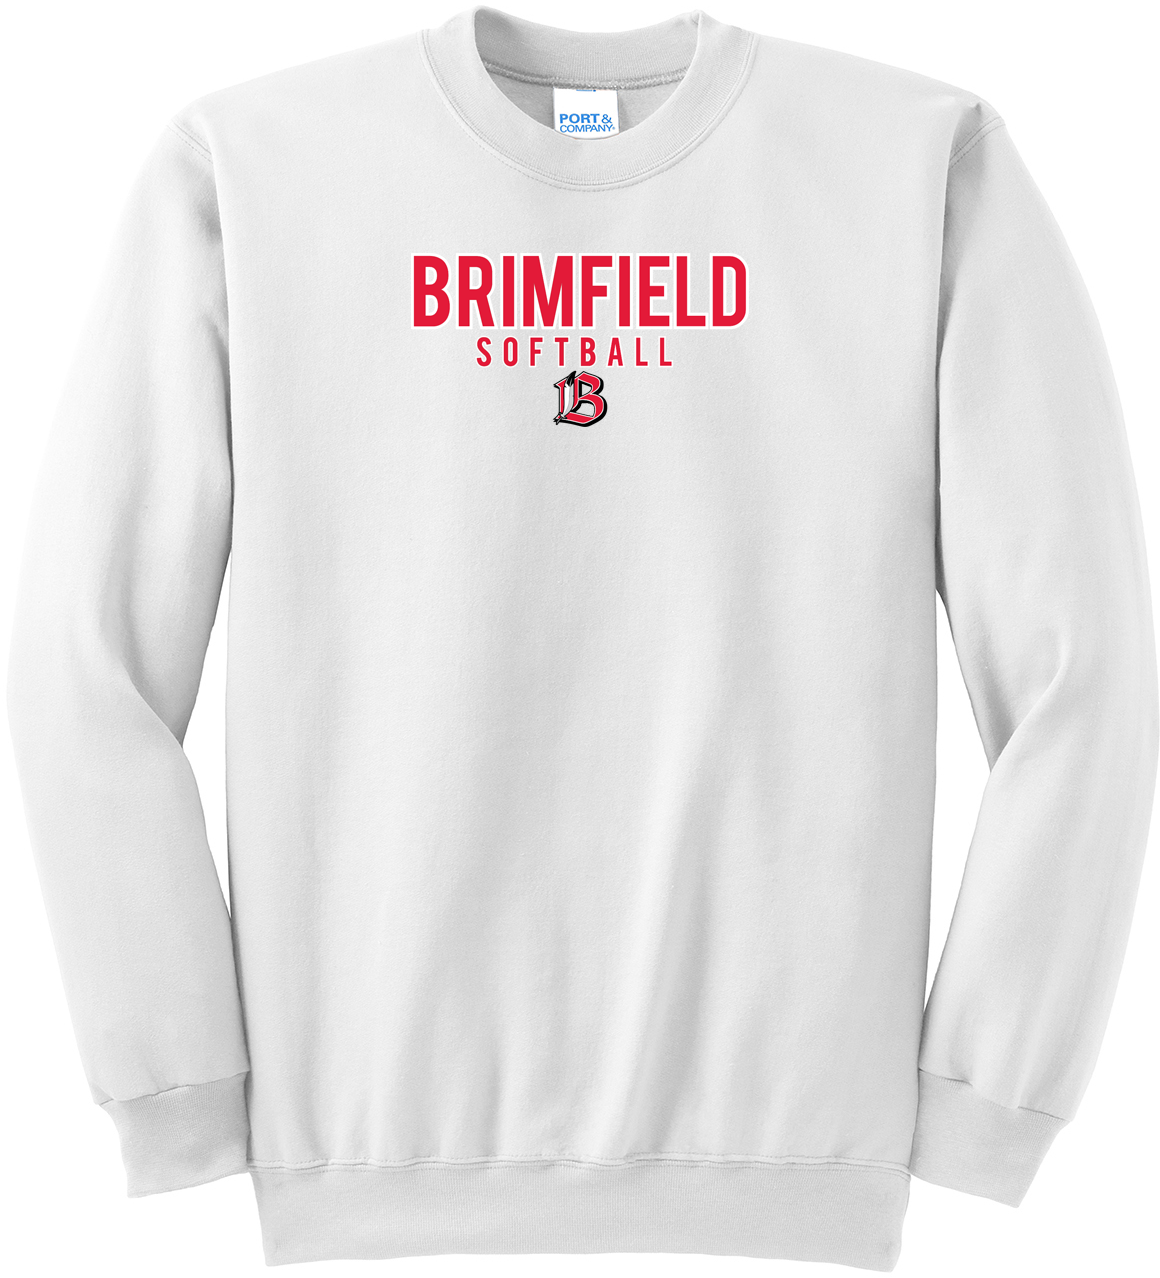 Brimfield Softball Crew Neck Sweater